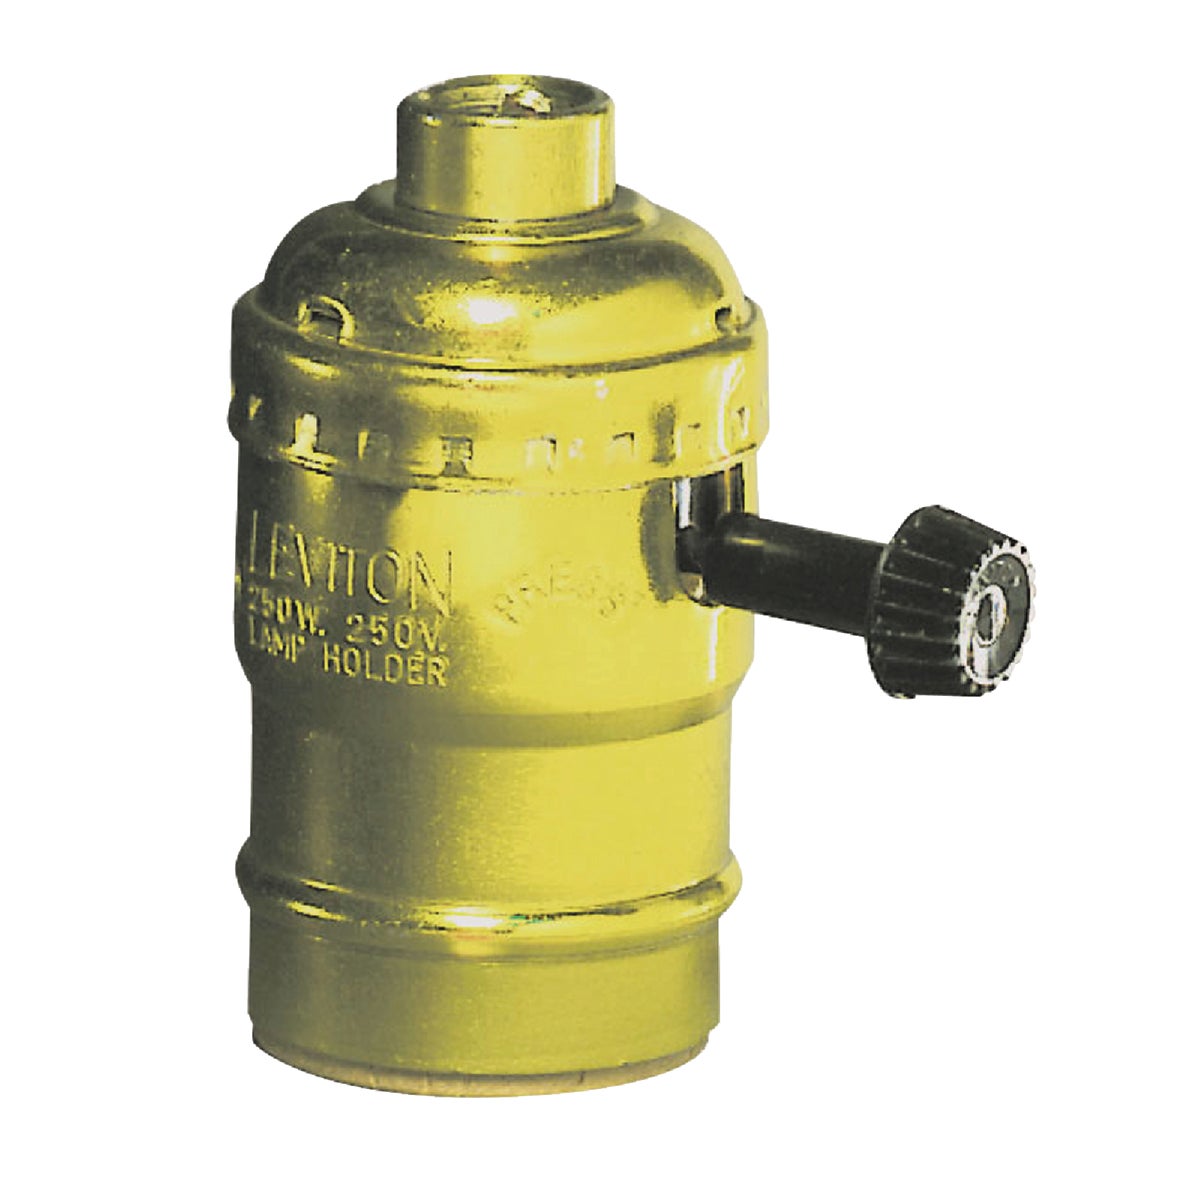 Item 513652, 3-way turn-knob lamp socket with polished gilt brass finish.